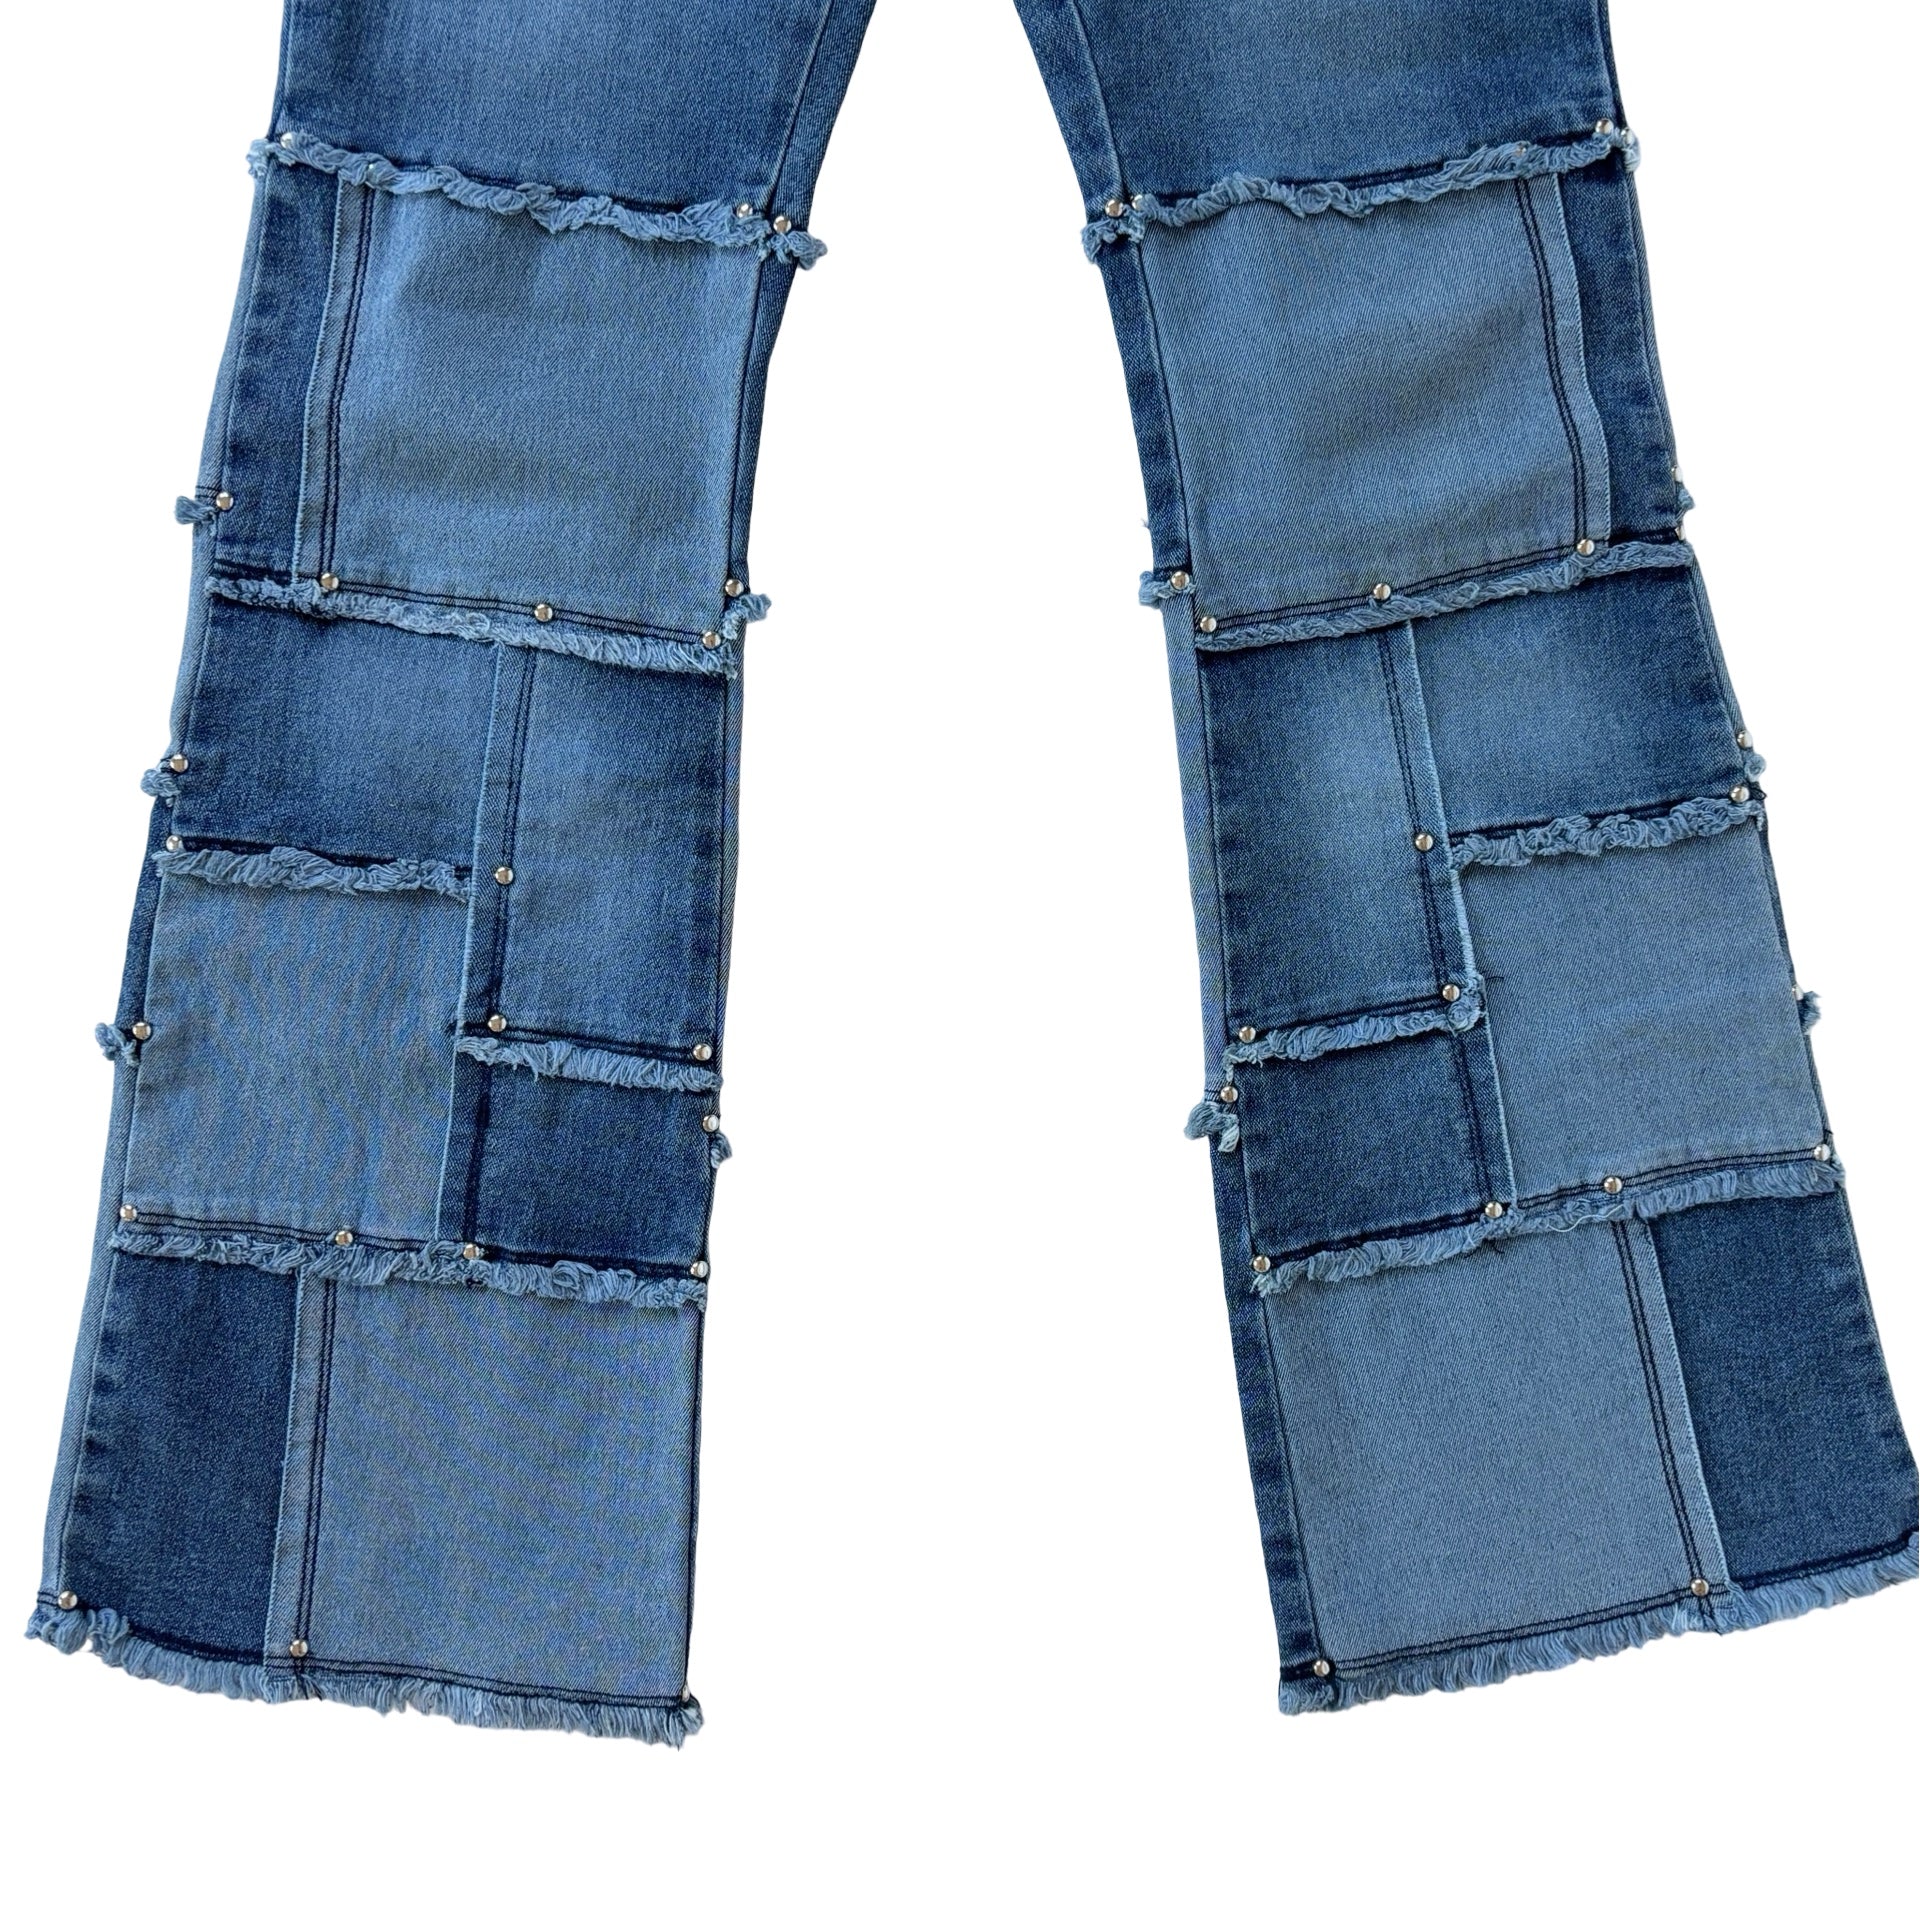 2000s Patchwork Jeans (XS)